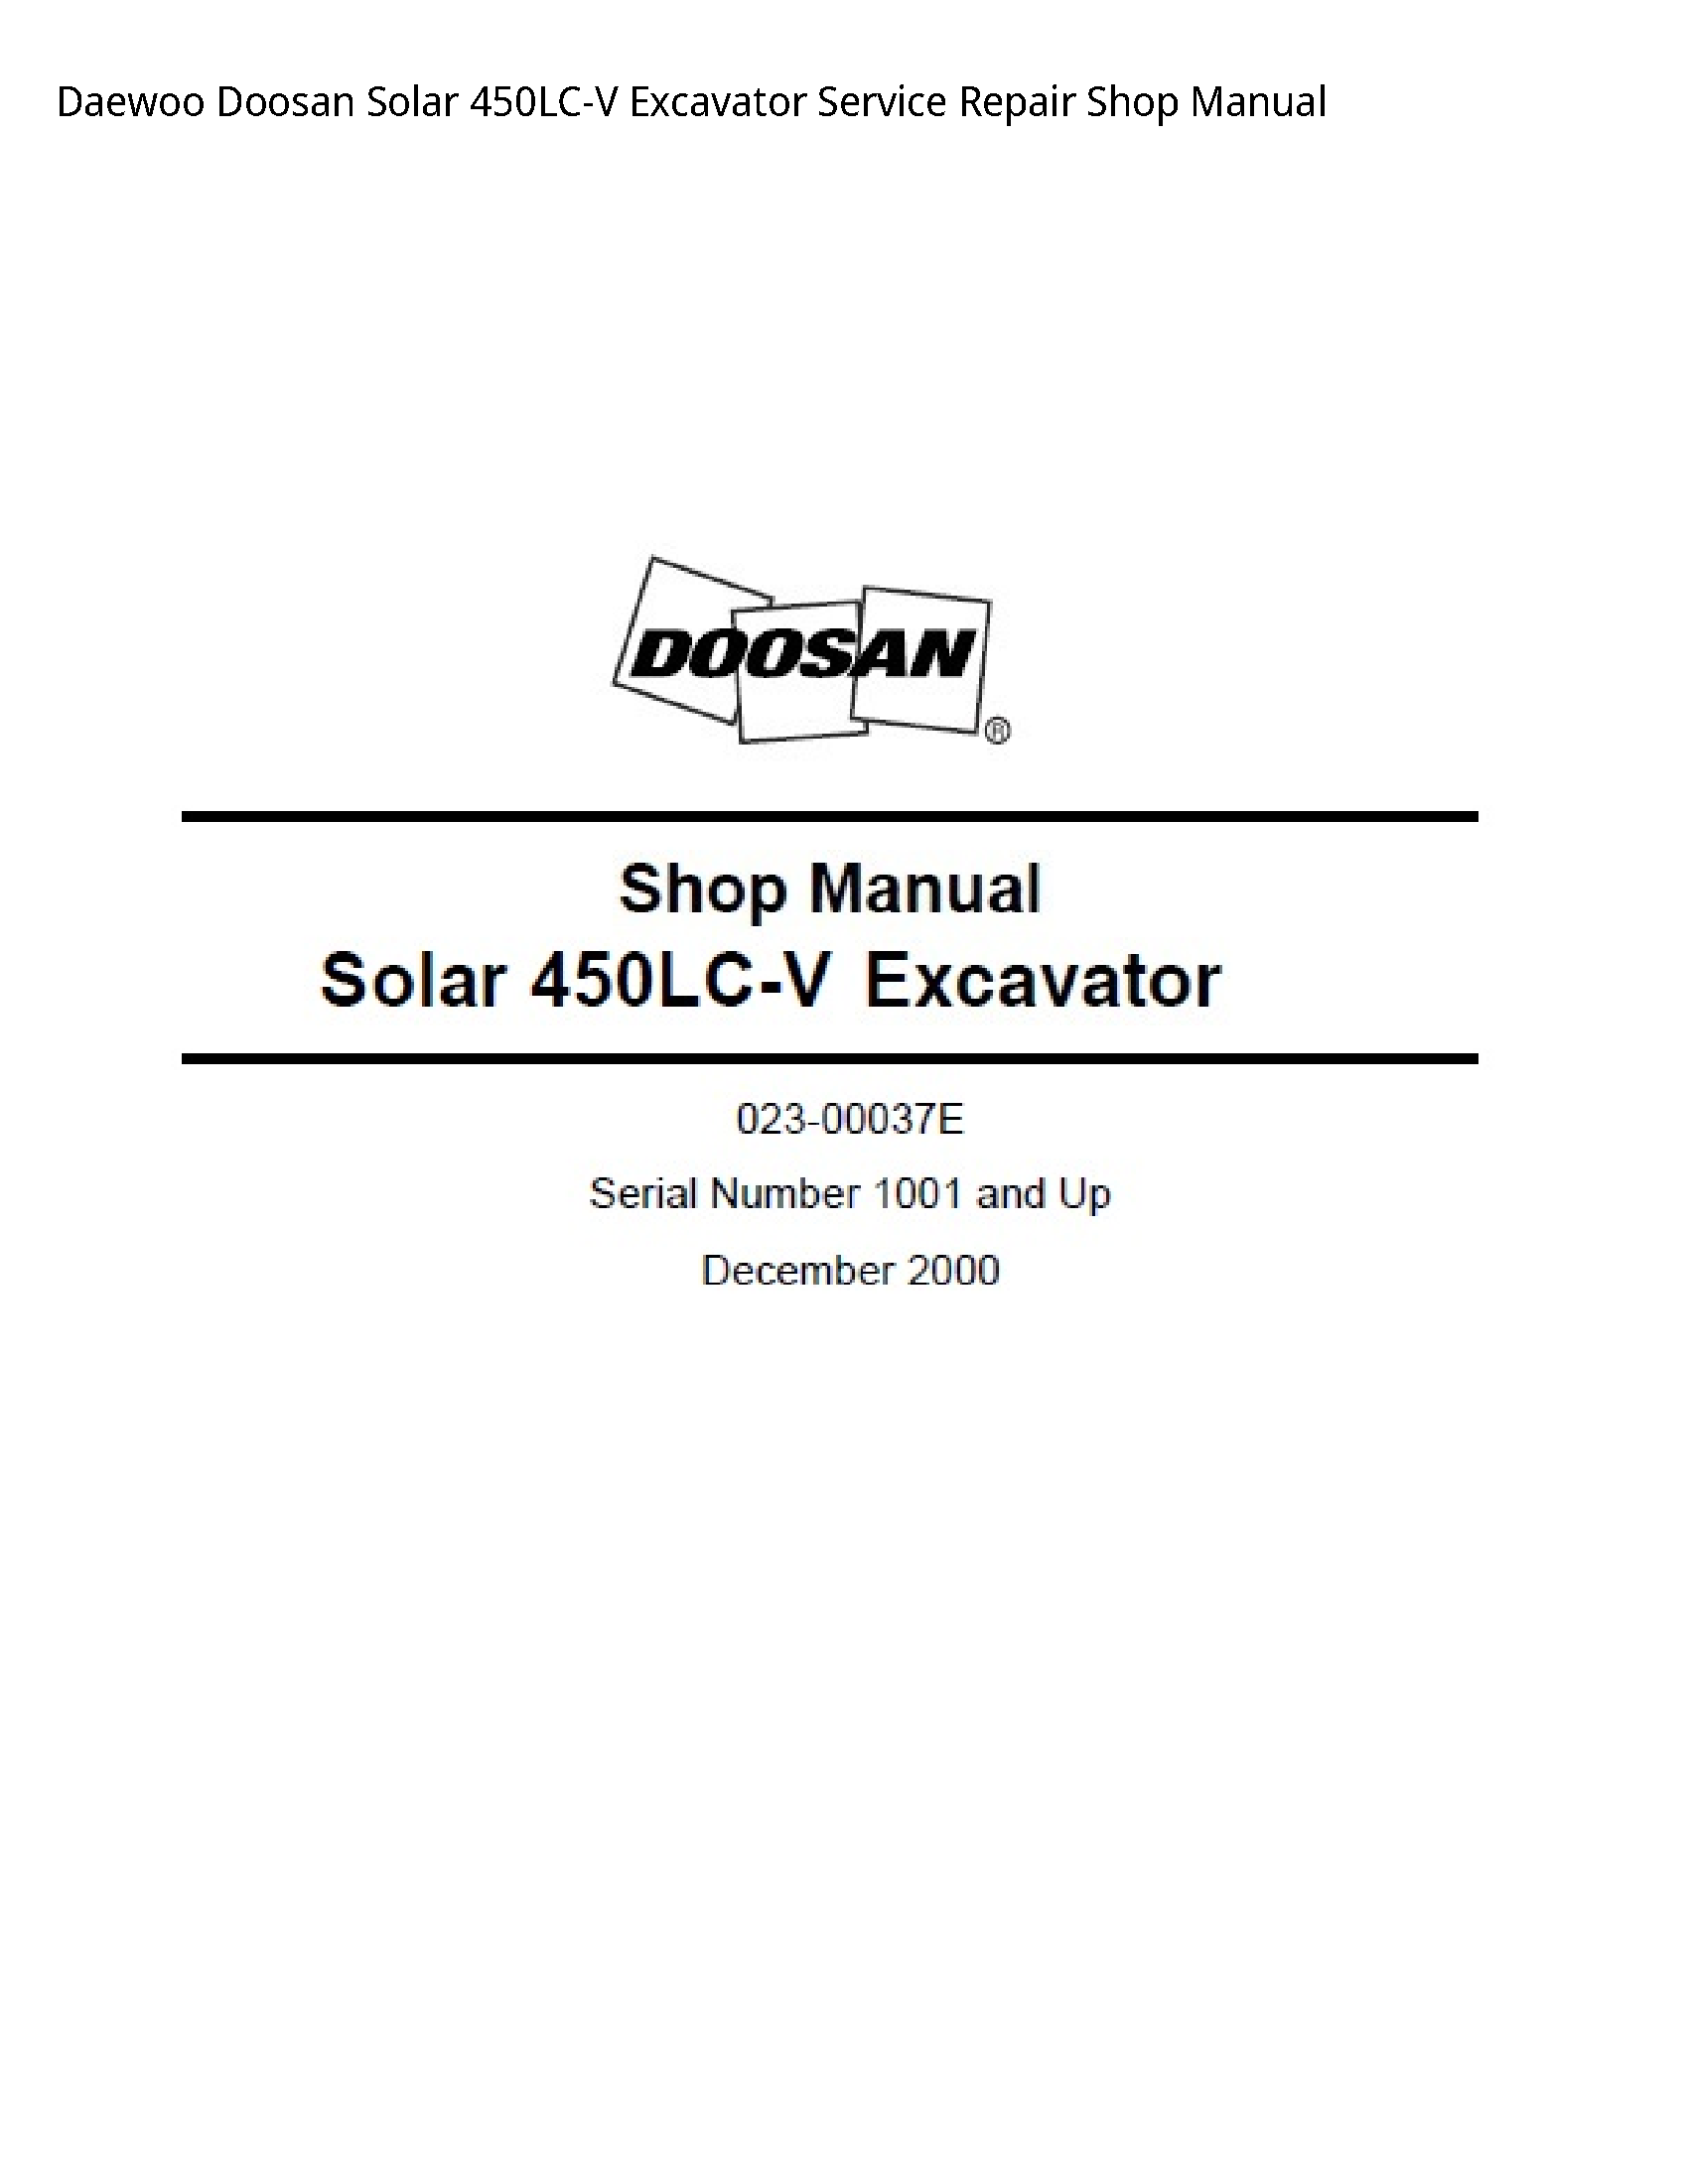 Daewoo Doosan 450LC-V Solar Excavator manual